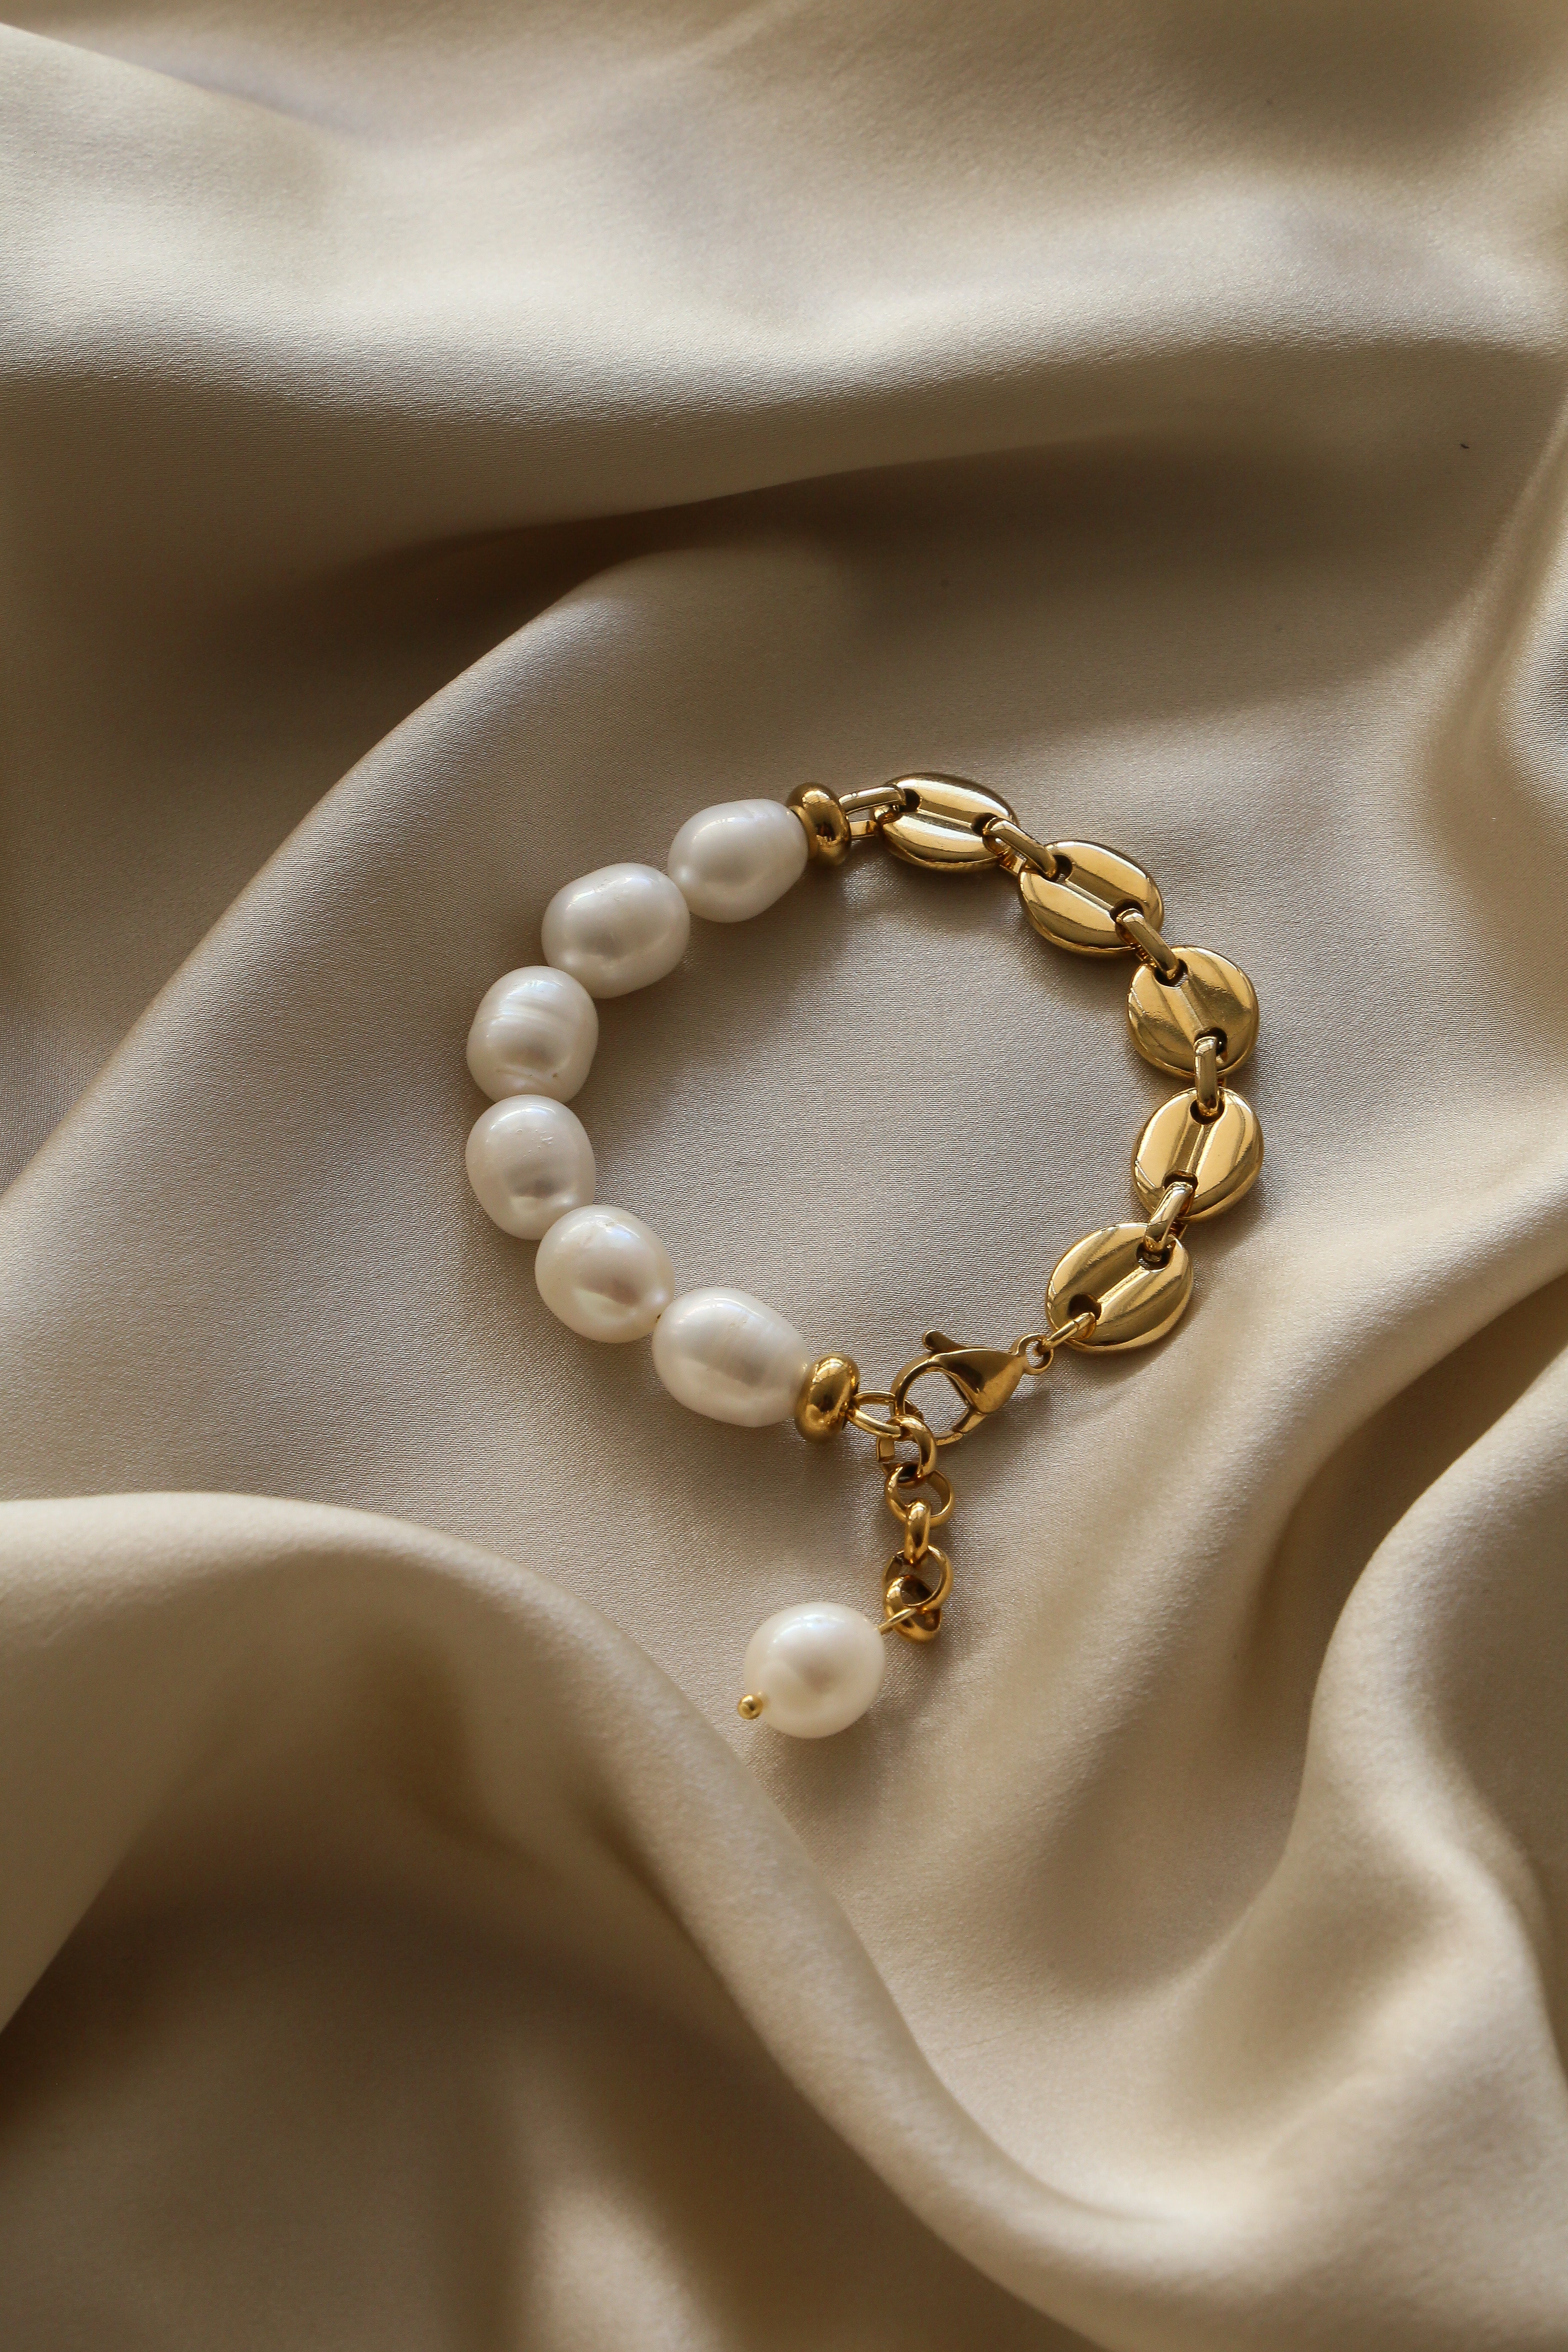 Pepa Bracelet - Boutique Minimaliste has waterproof, durable, elegant and vintage inspired jewelry